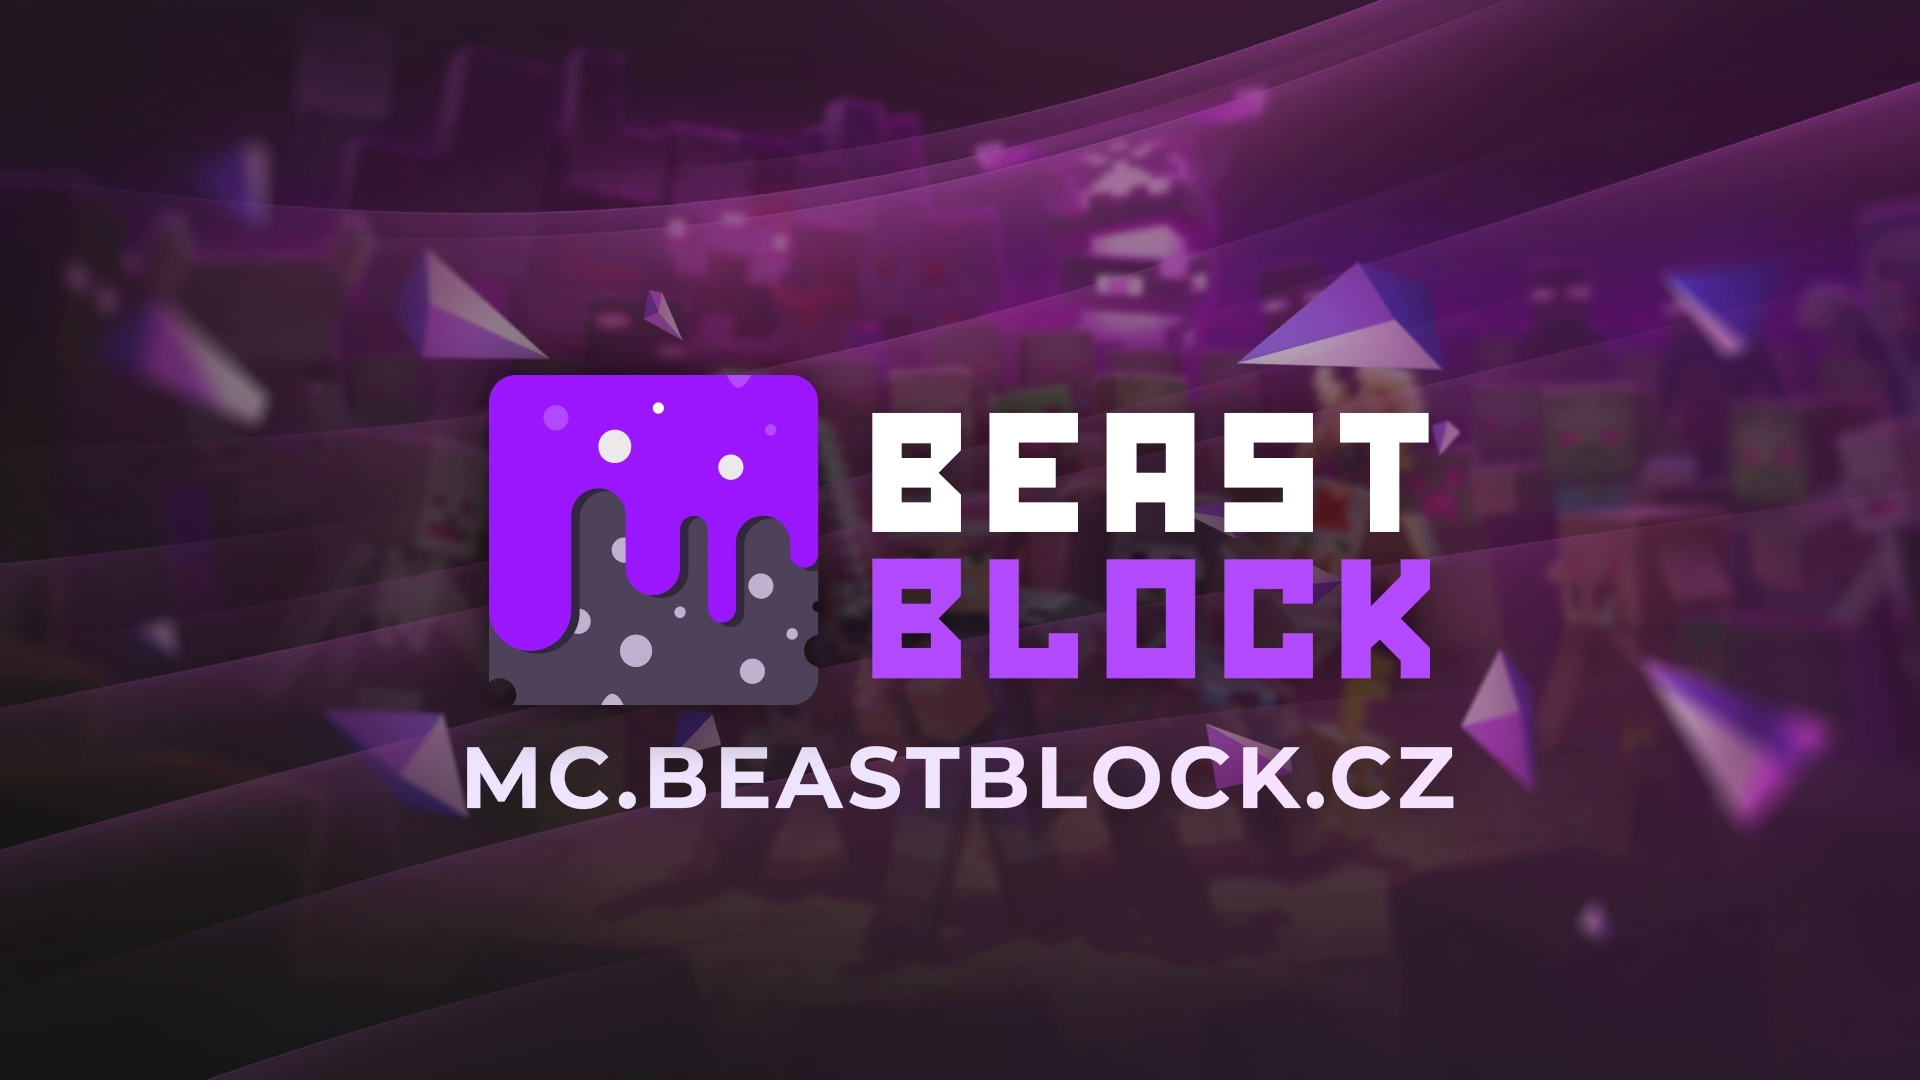 BeastBlock.cz server